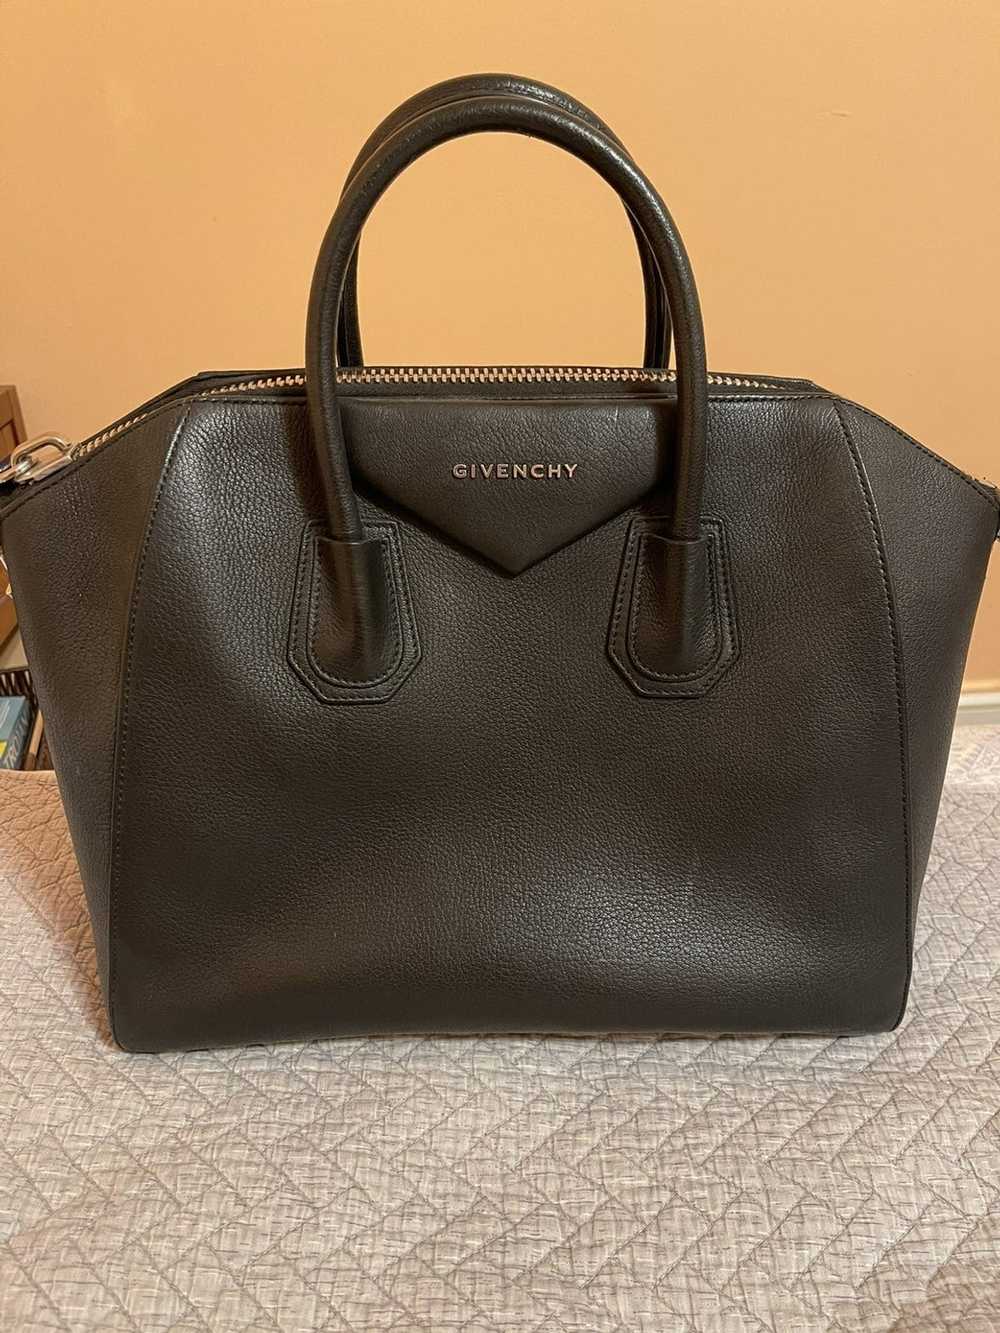 Givenchy Givenchy Antigona Black Leather Bag - image 1